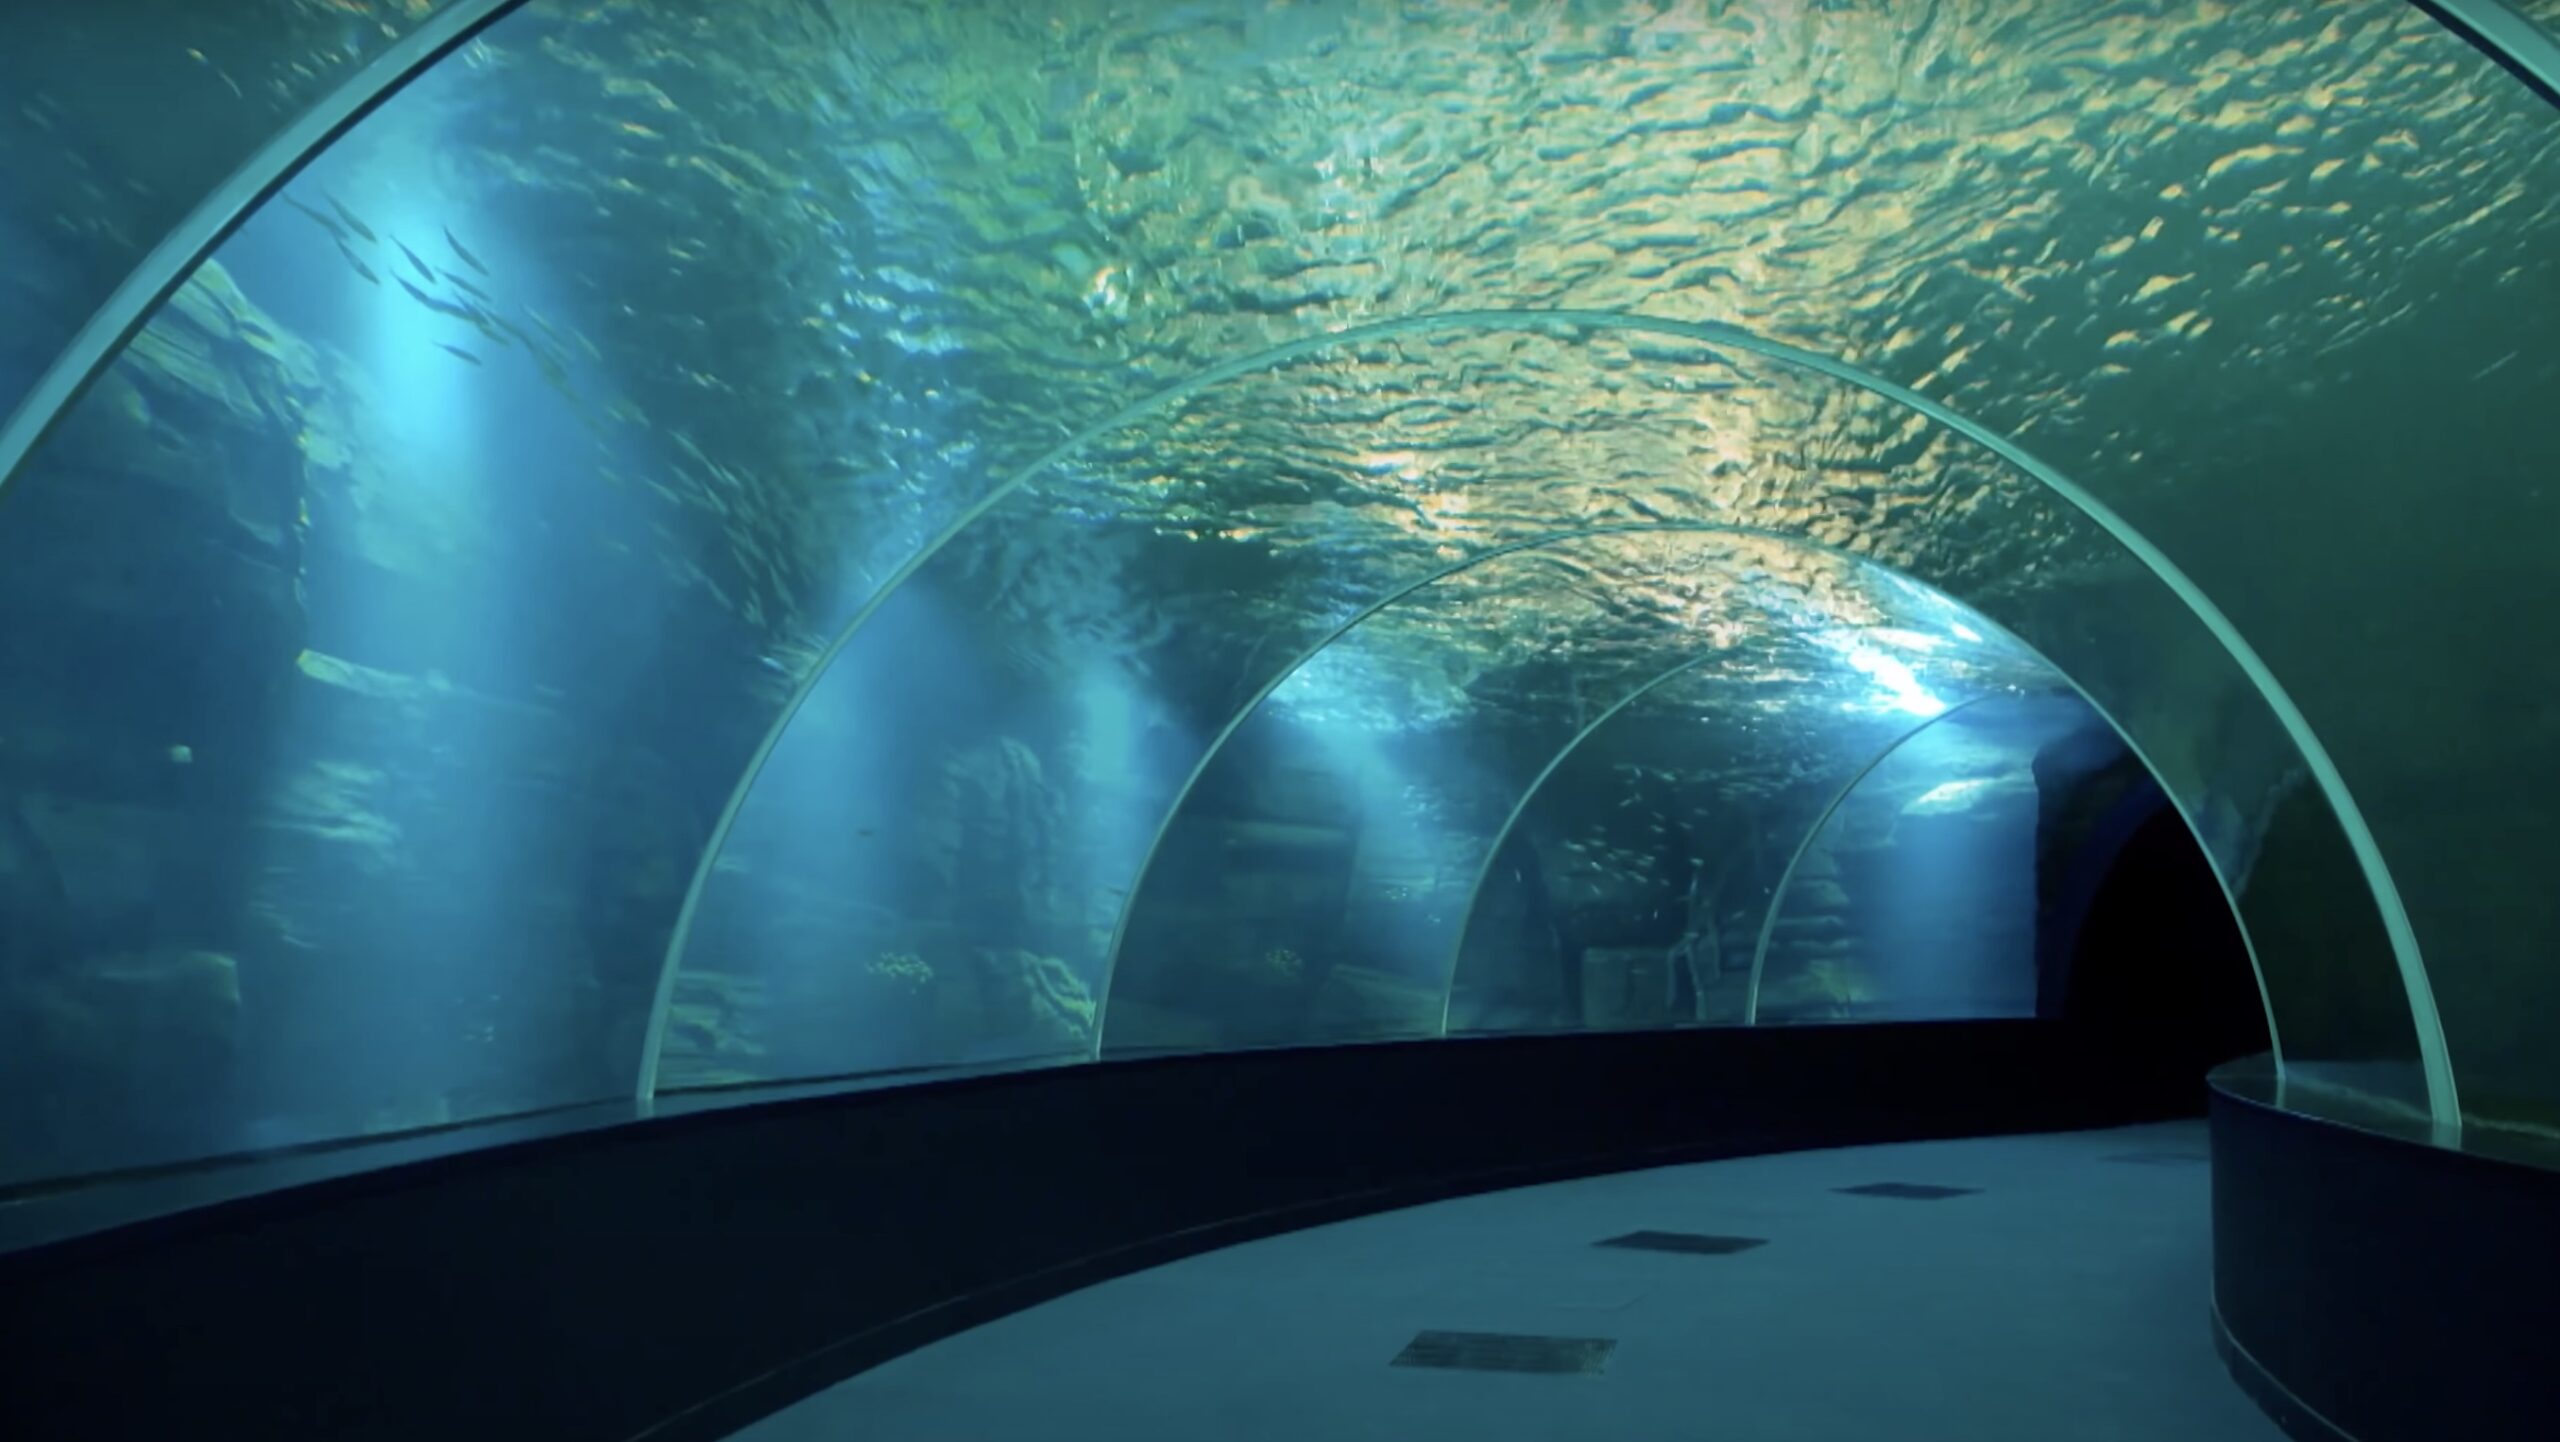 tunel led luz acuario publico